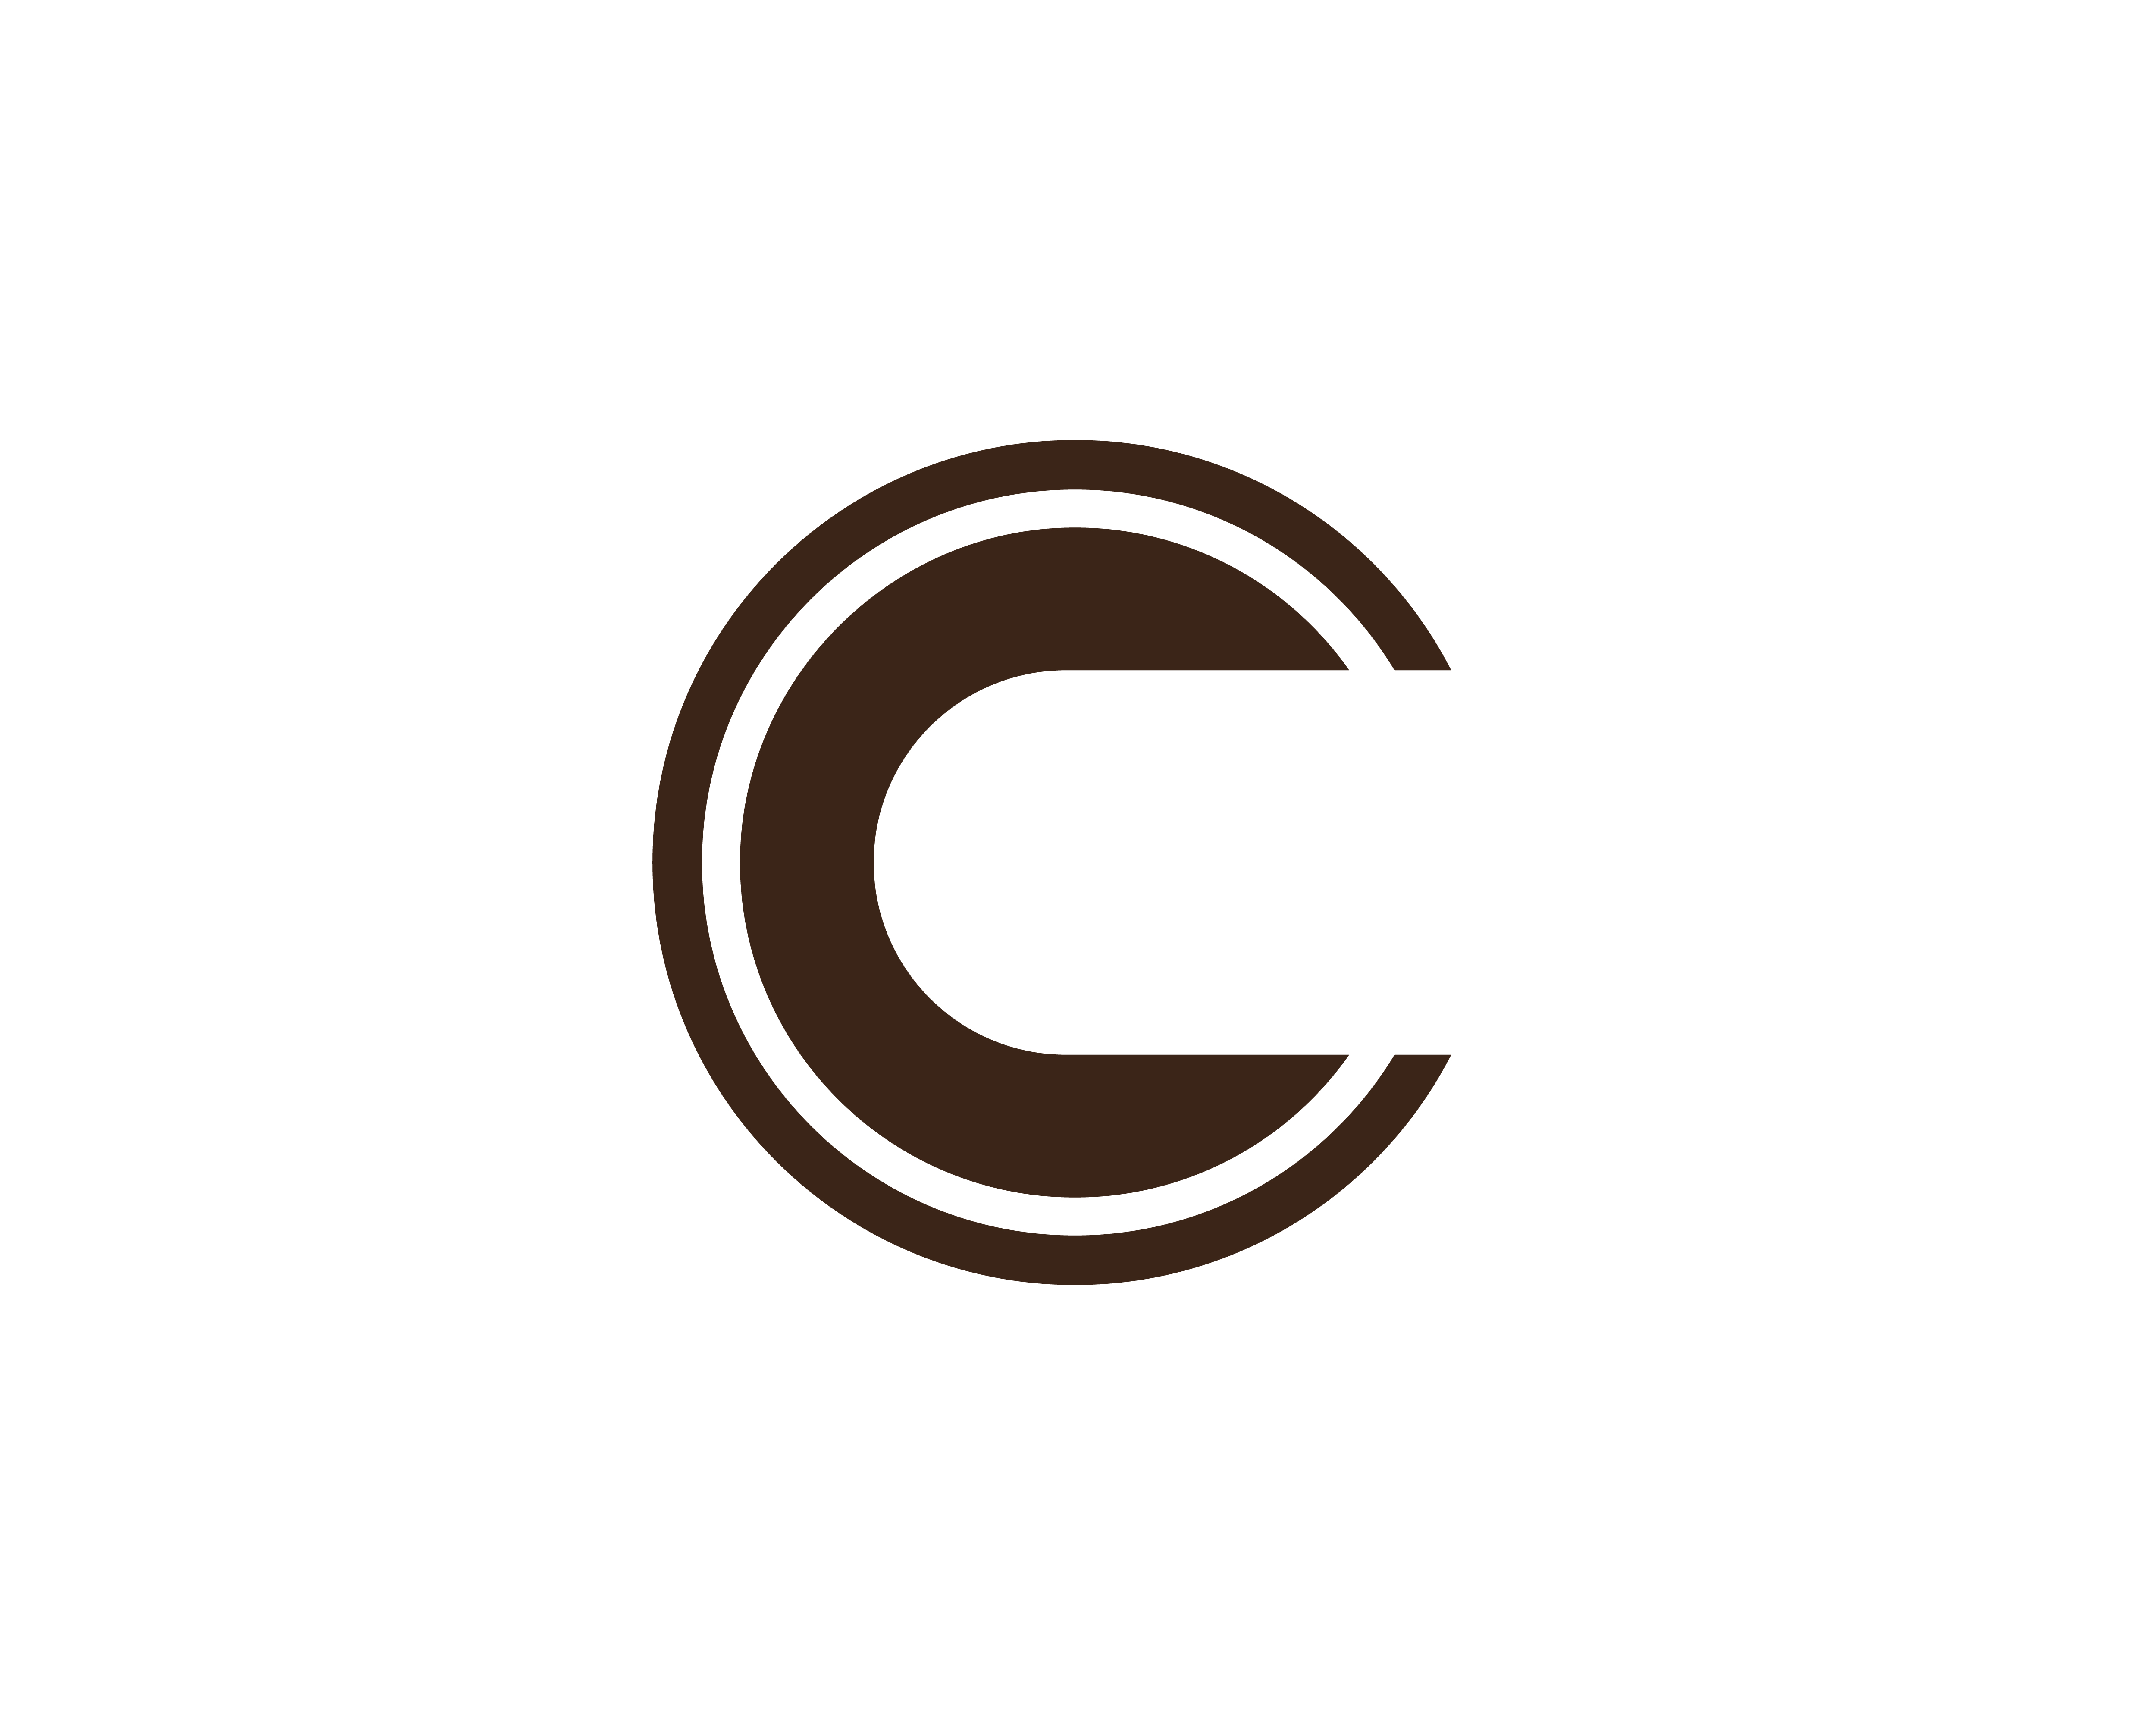 Design For Letter C